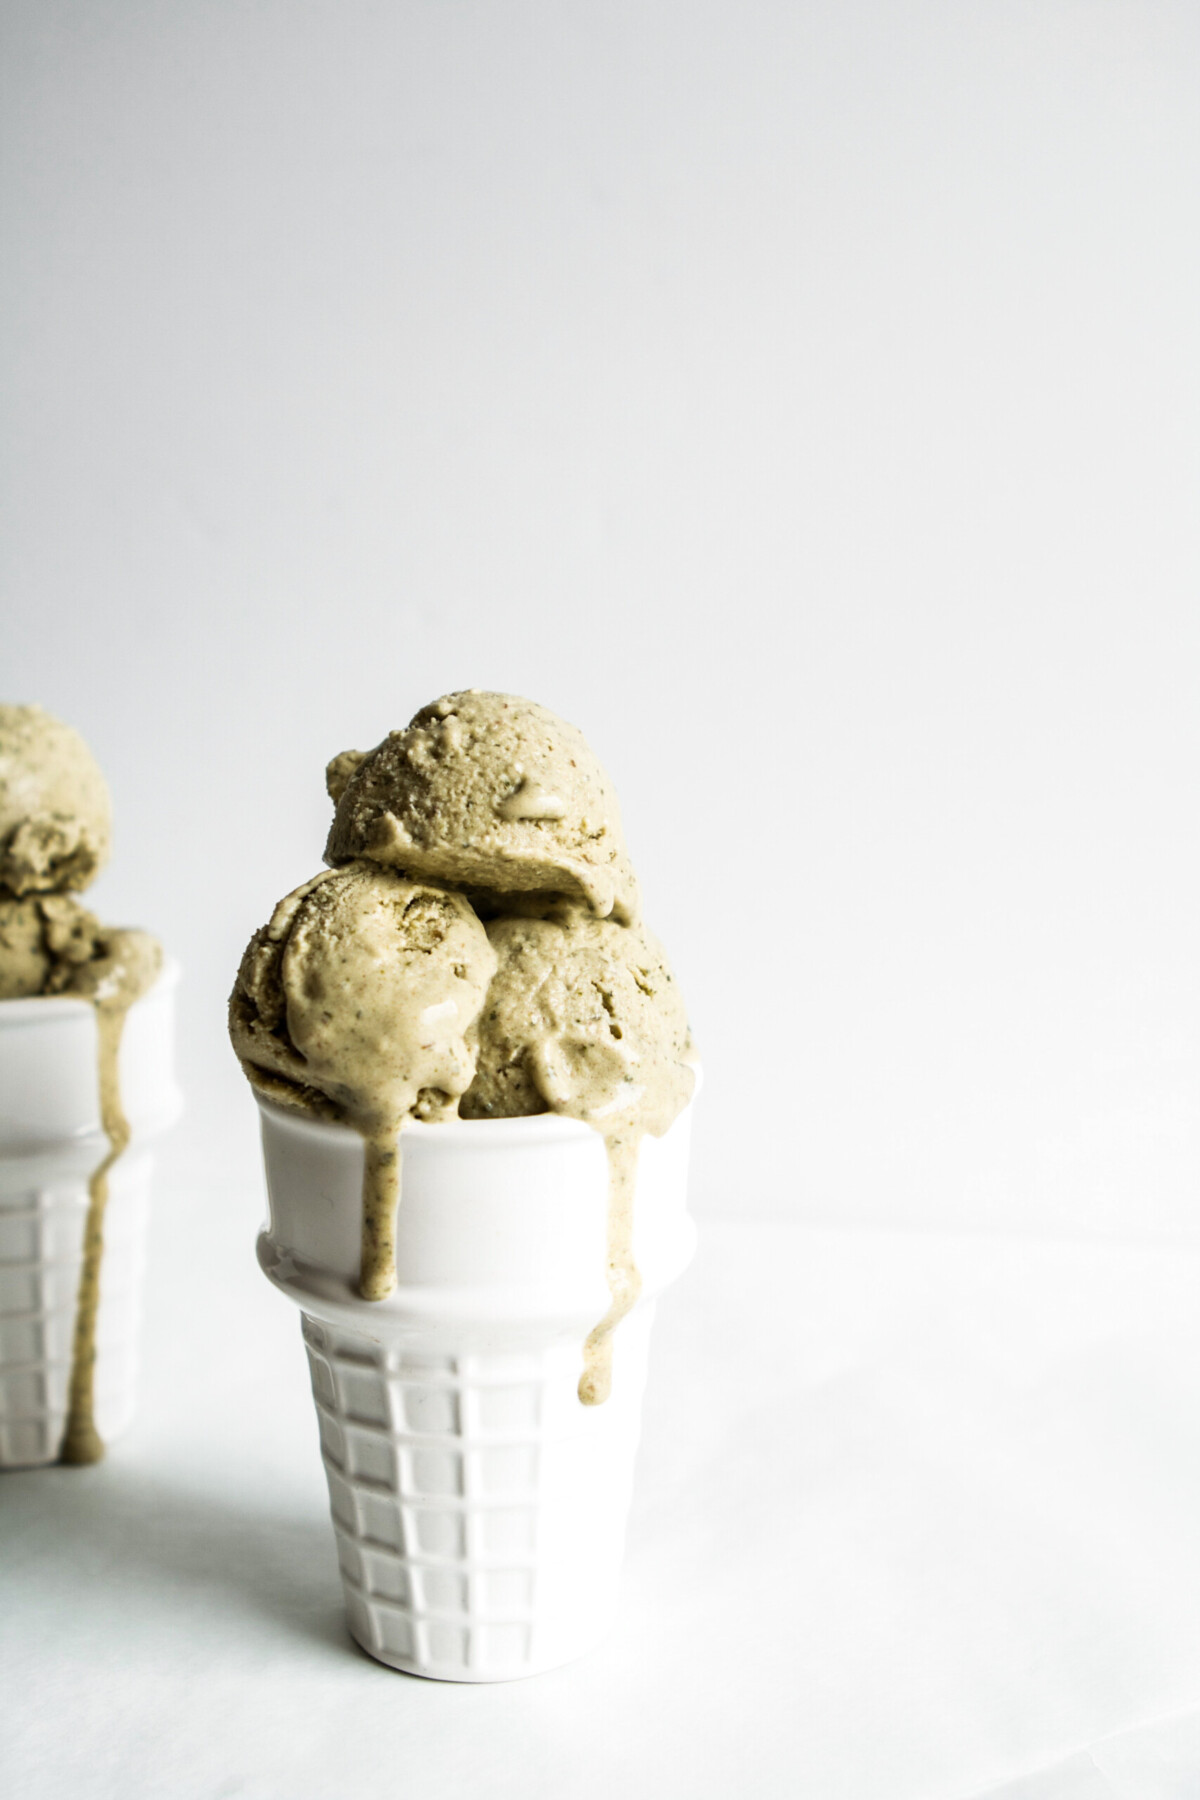 vegan mint ice cream scooped into white glass cone